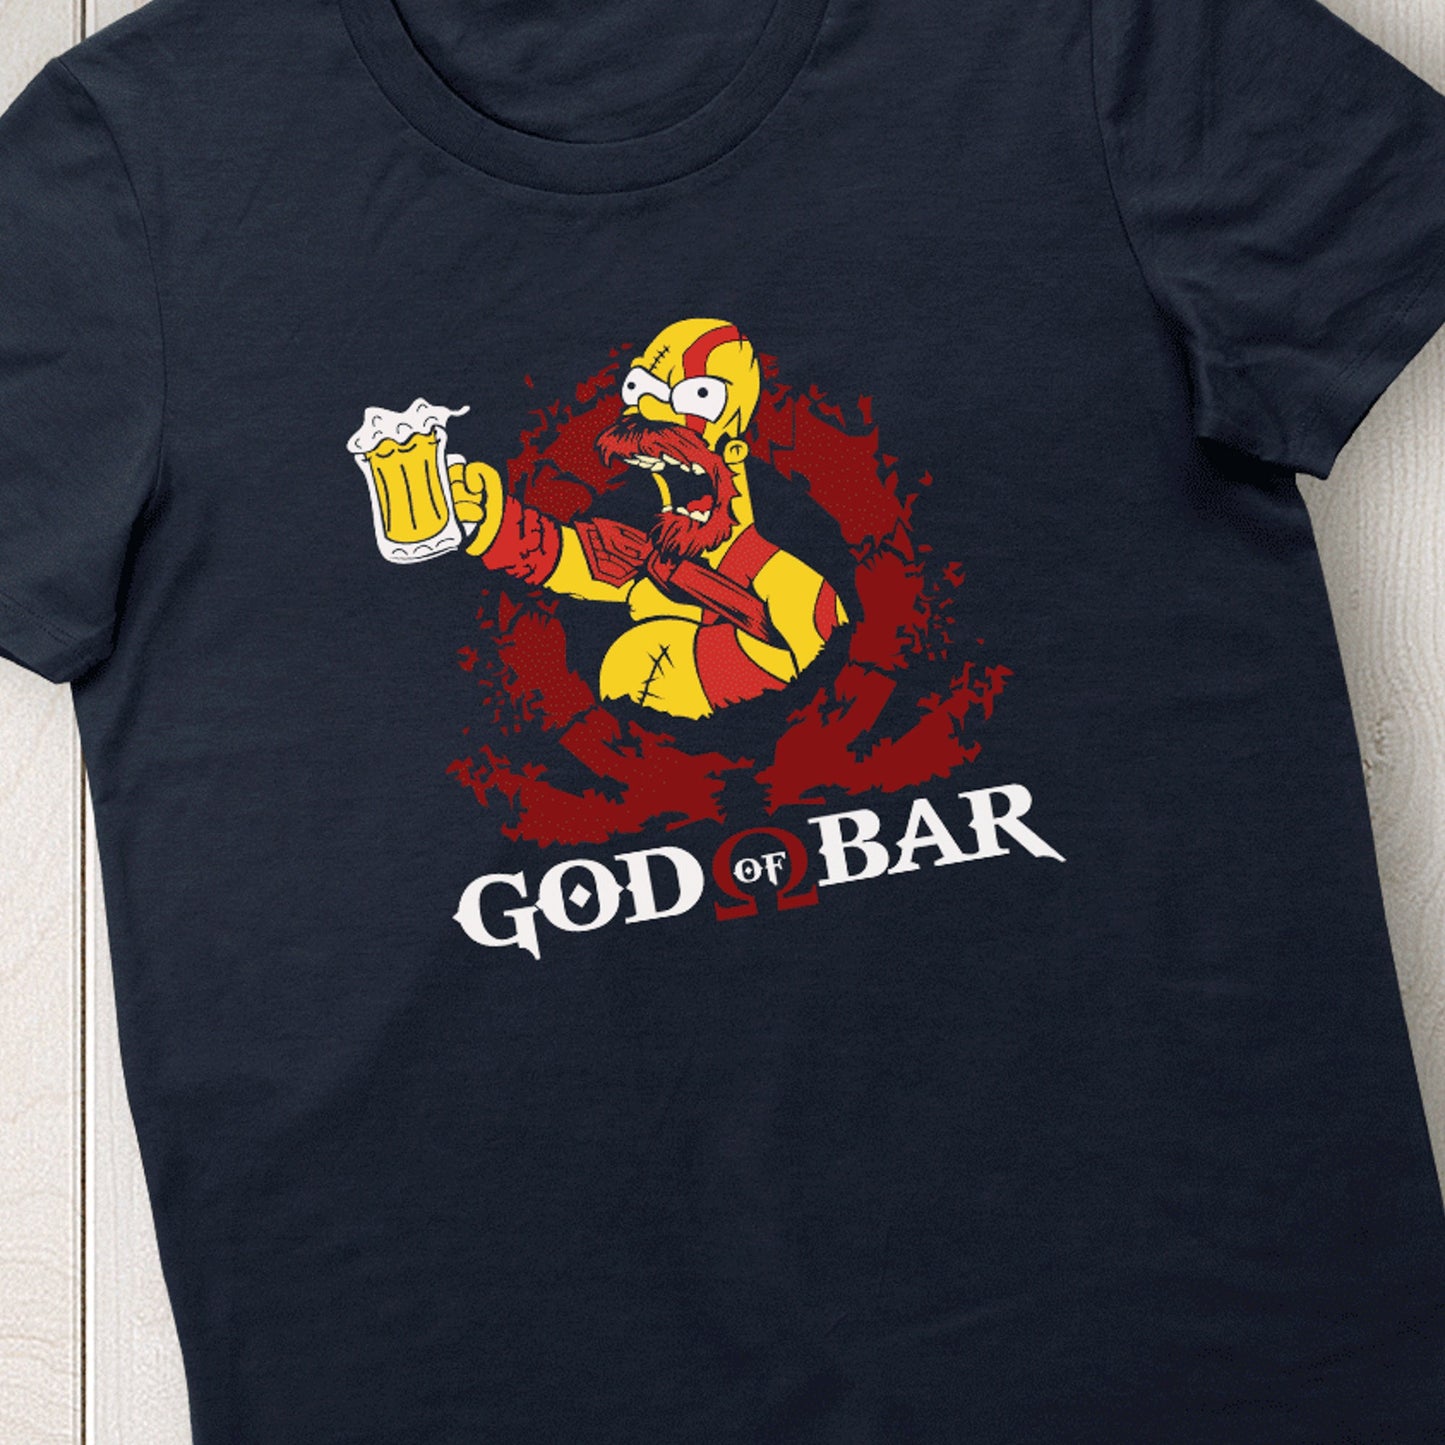 God of Bar Tshirt Kids